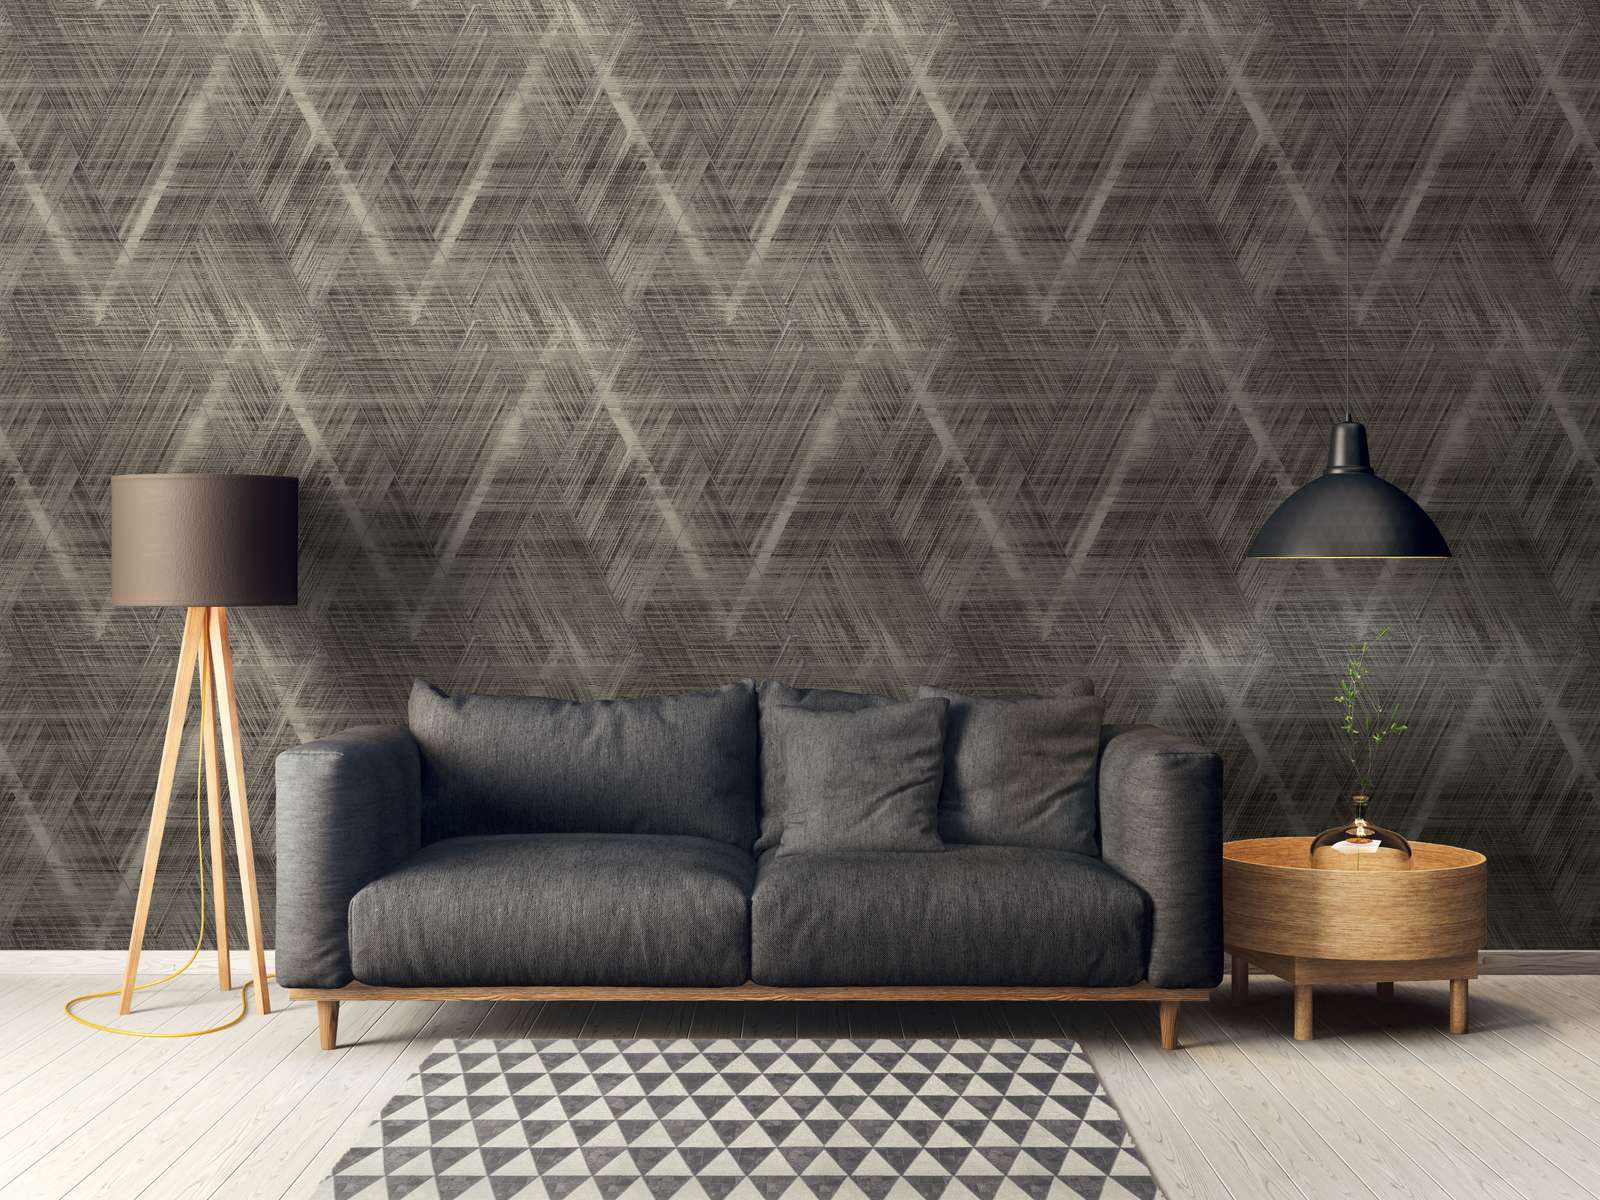             Textile optics wallpaper with diamond pattern - metallic, grey
        